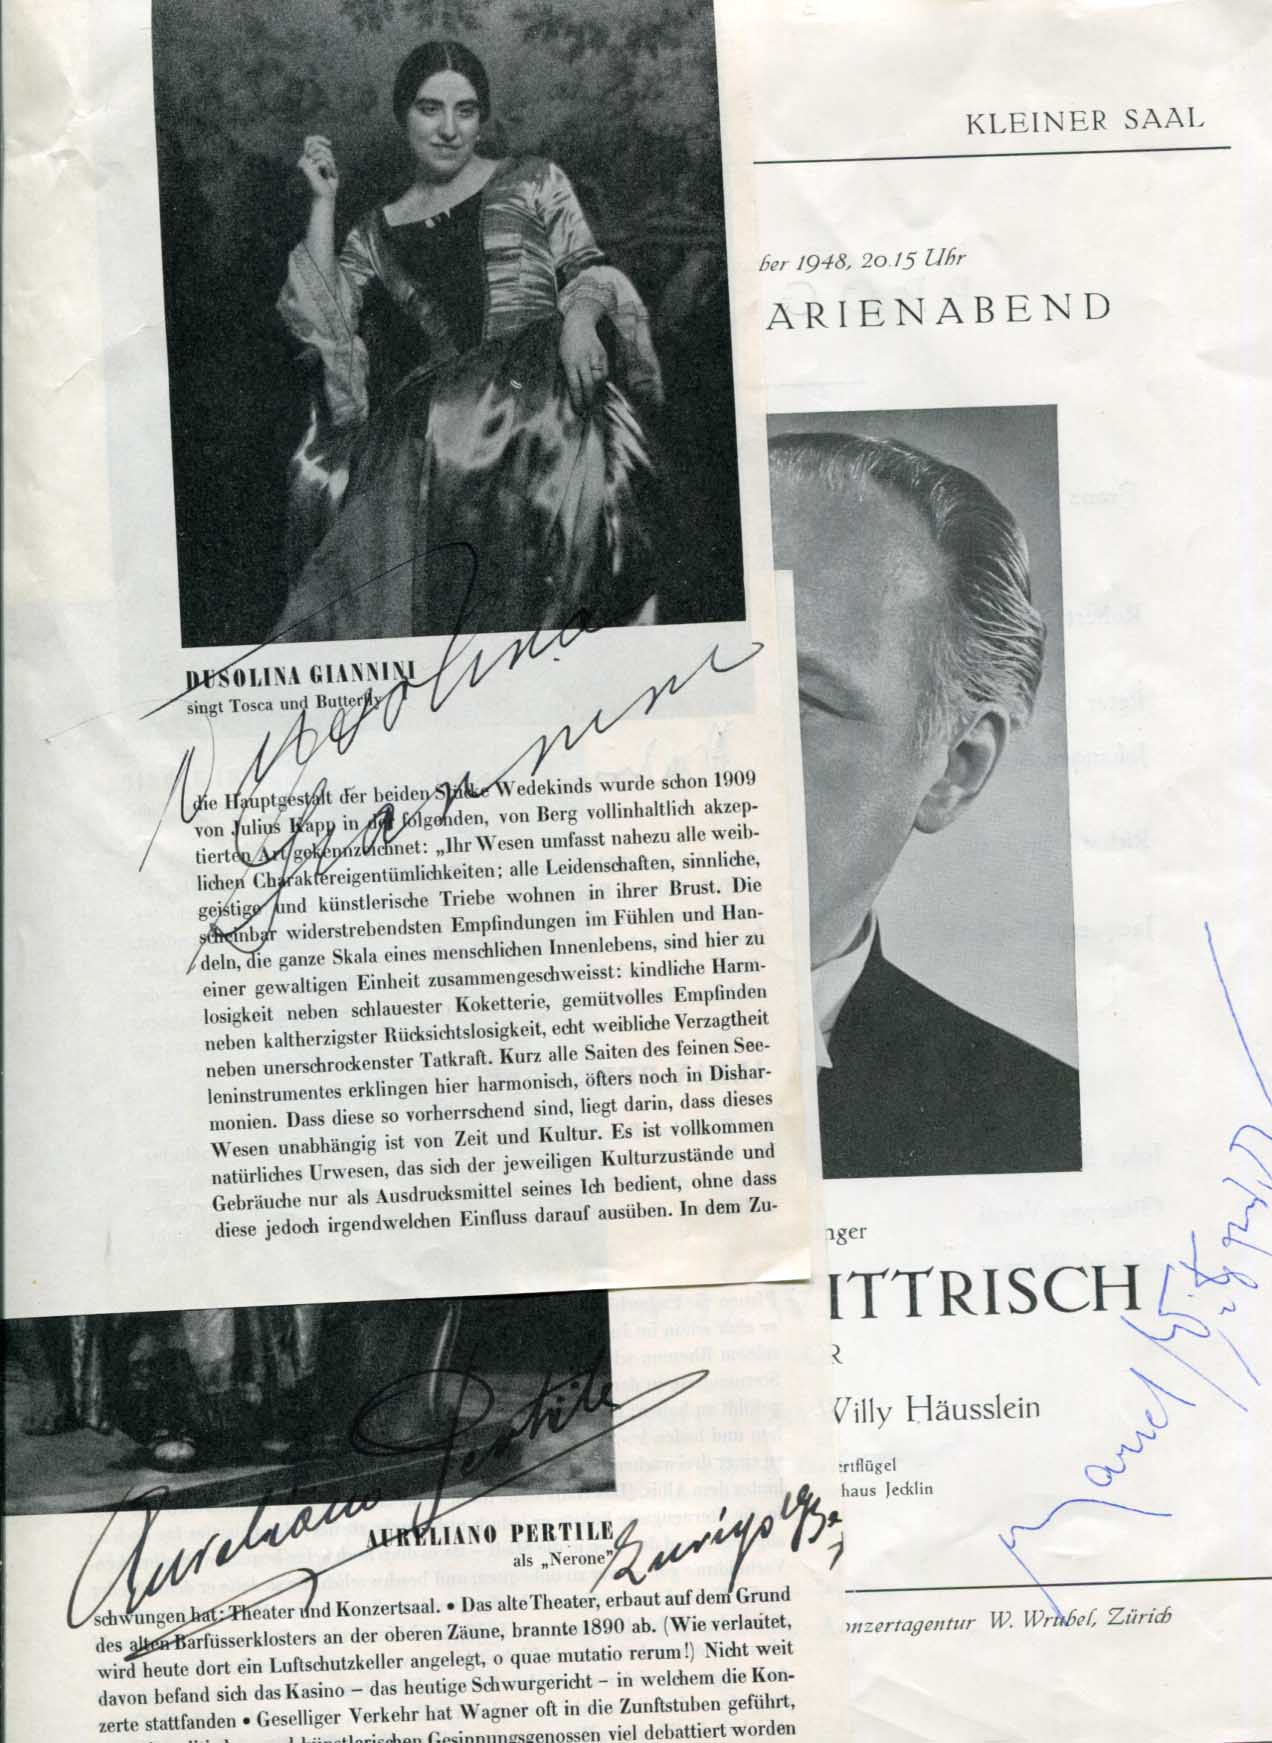  Tenors &amp; Sopranos Autograph Autogramm | ID 7851720736917